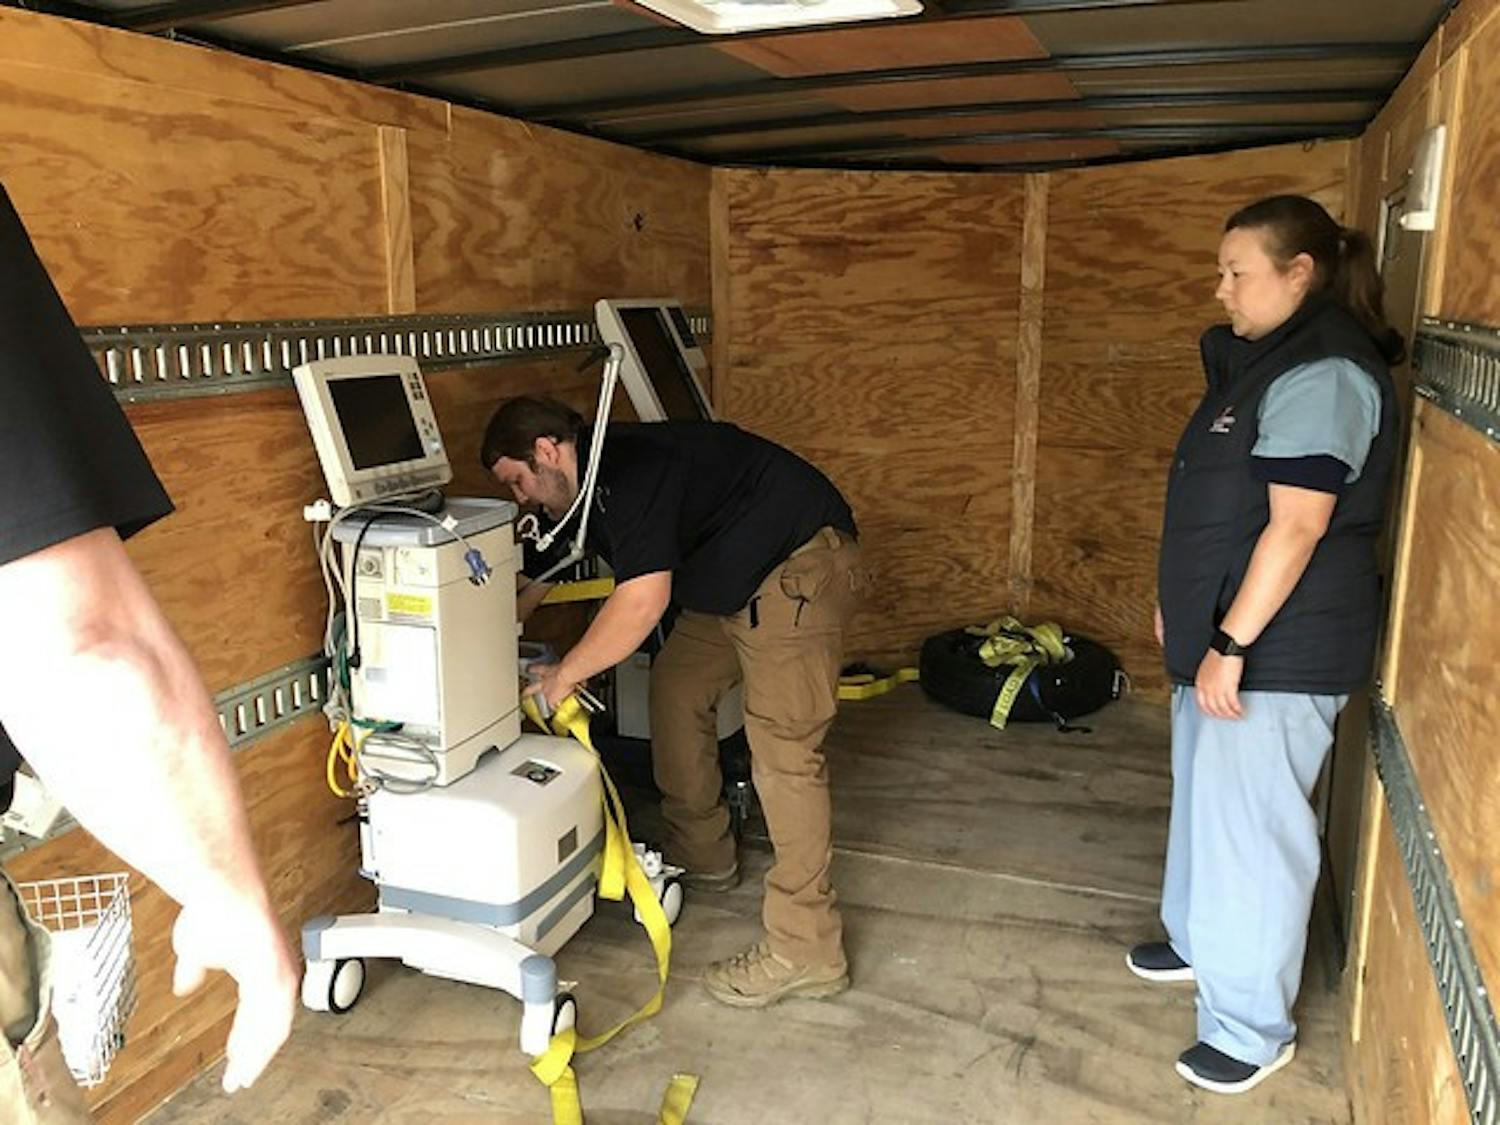 The Auburn veterinary school is donating ventilators to help COVID-19 patients.